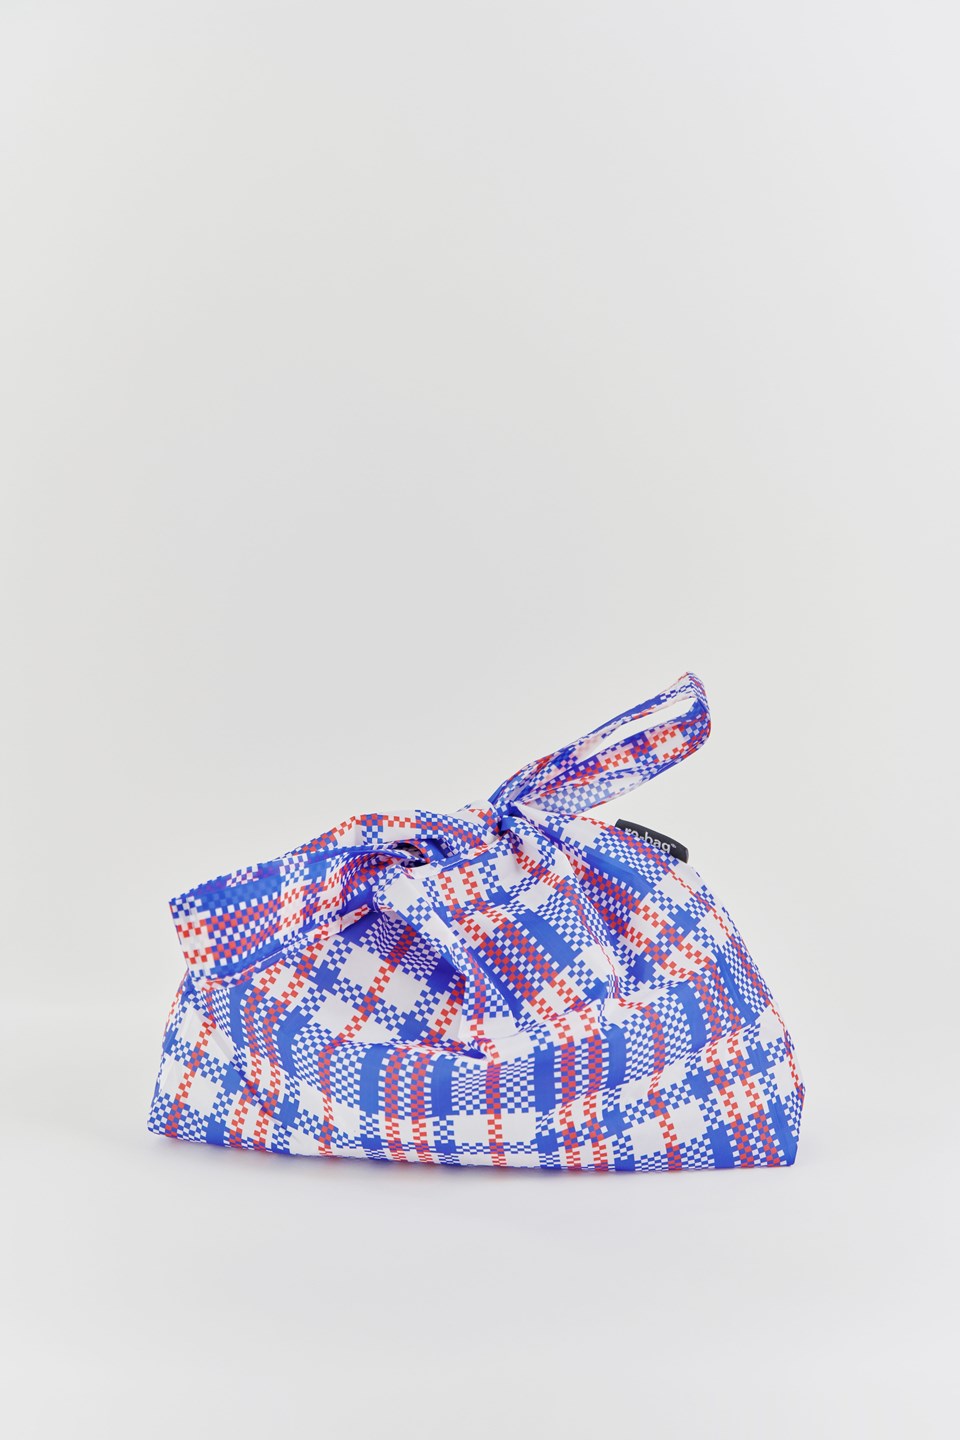 Faltbare Re-Bag Tasche mit Chinamuster aus Polyester